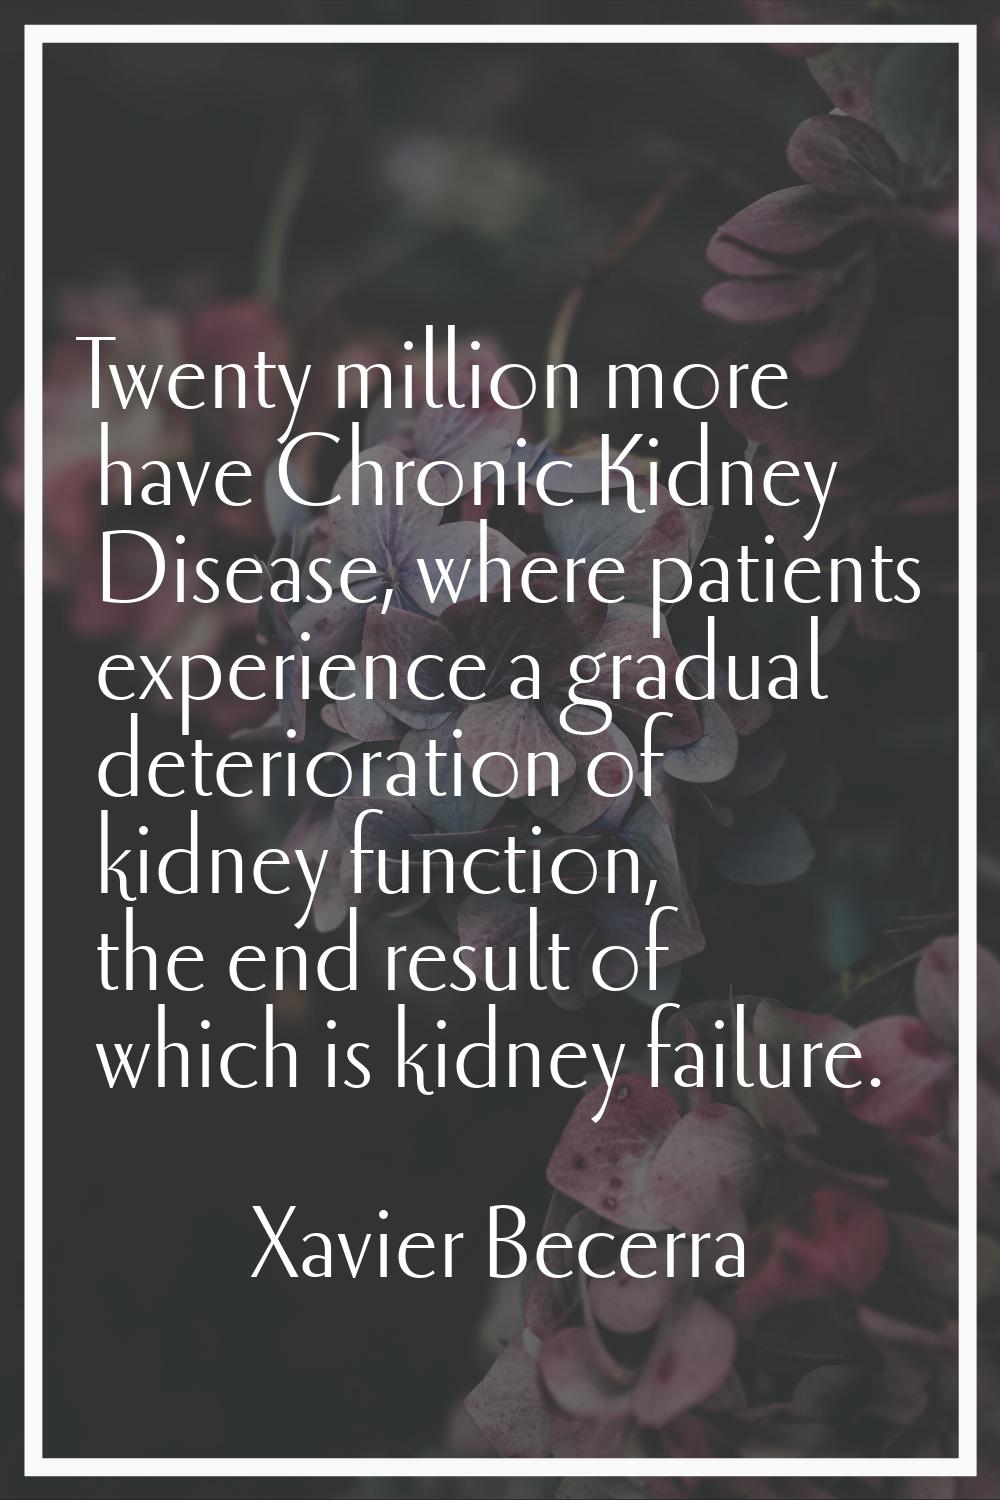 Twenty million more have Chronic Kidney Disease, where patients experience a gradual deterioration 